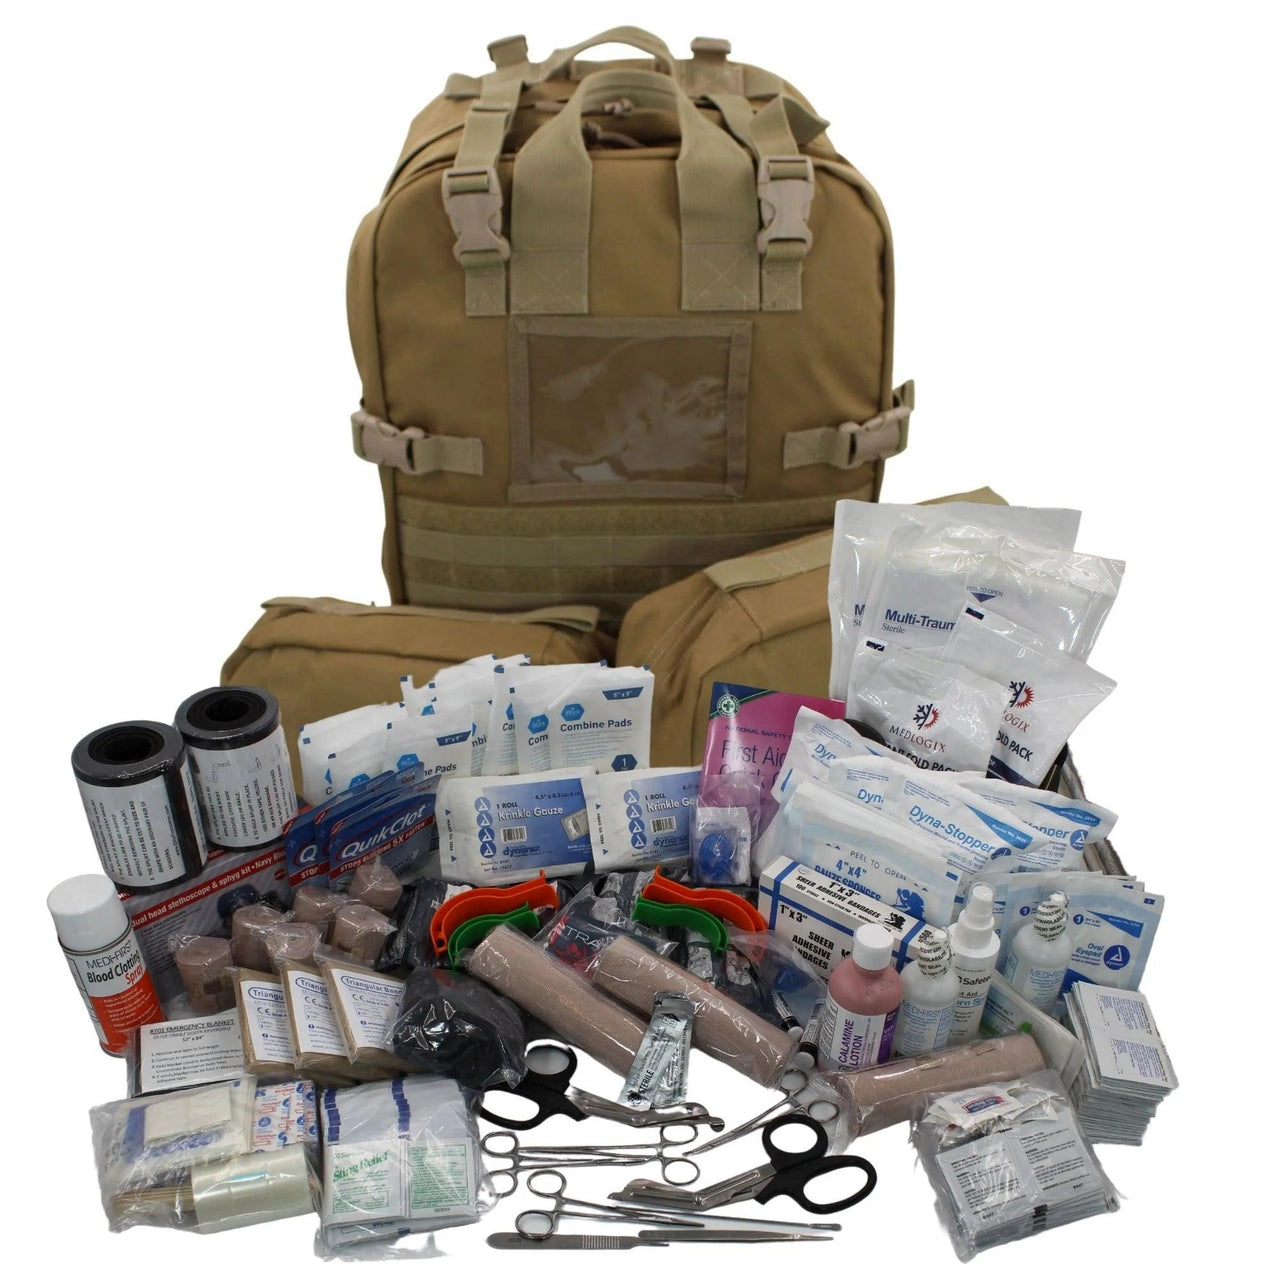 STOMP Bag and Medical Kit - Vendor